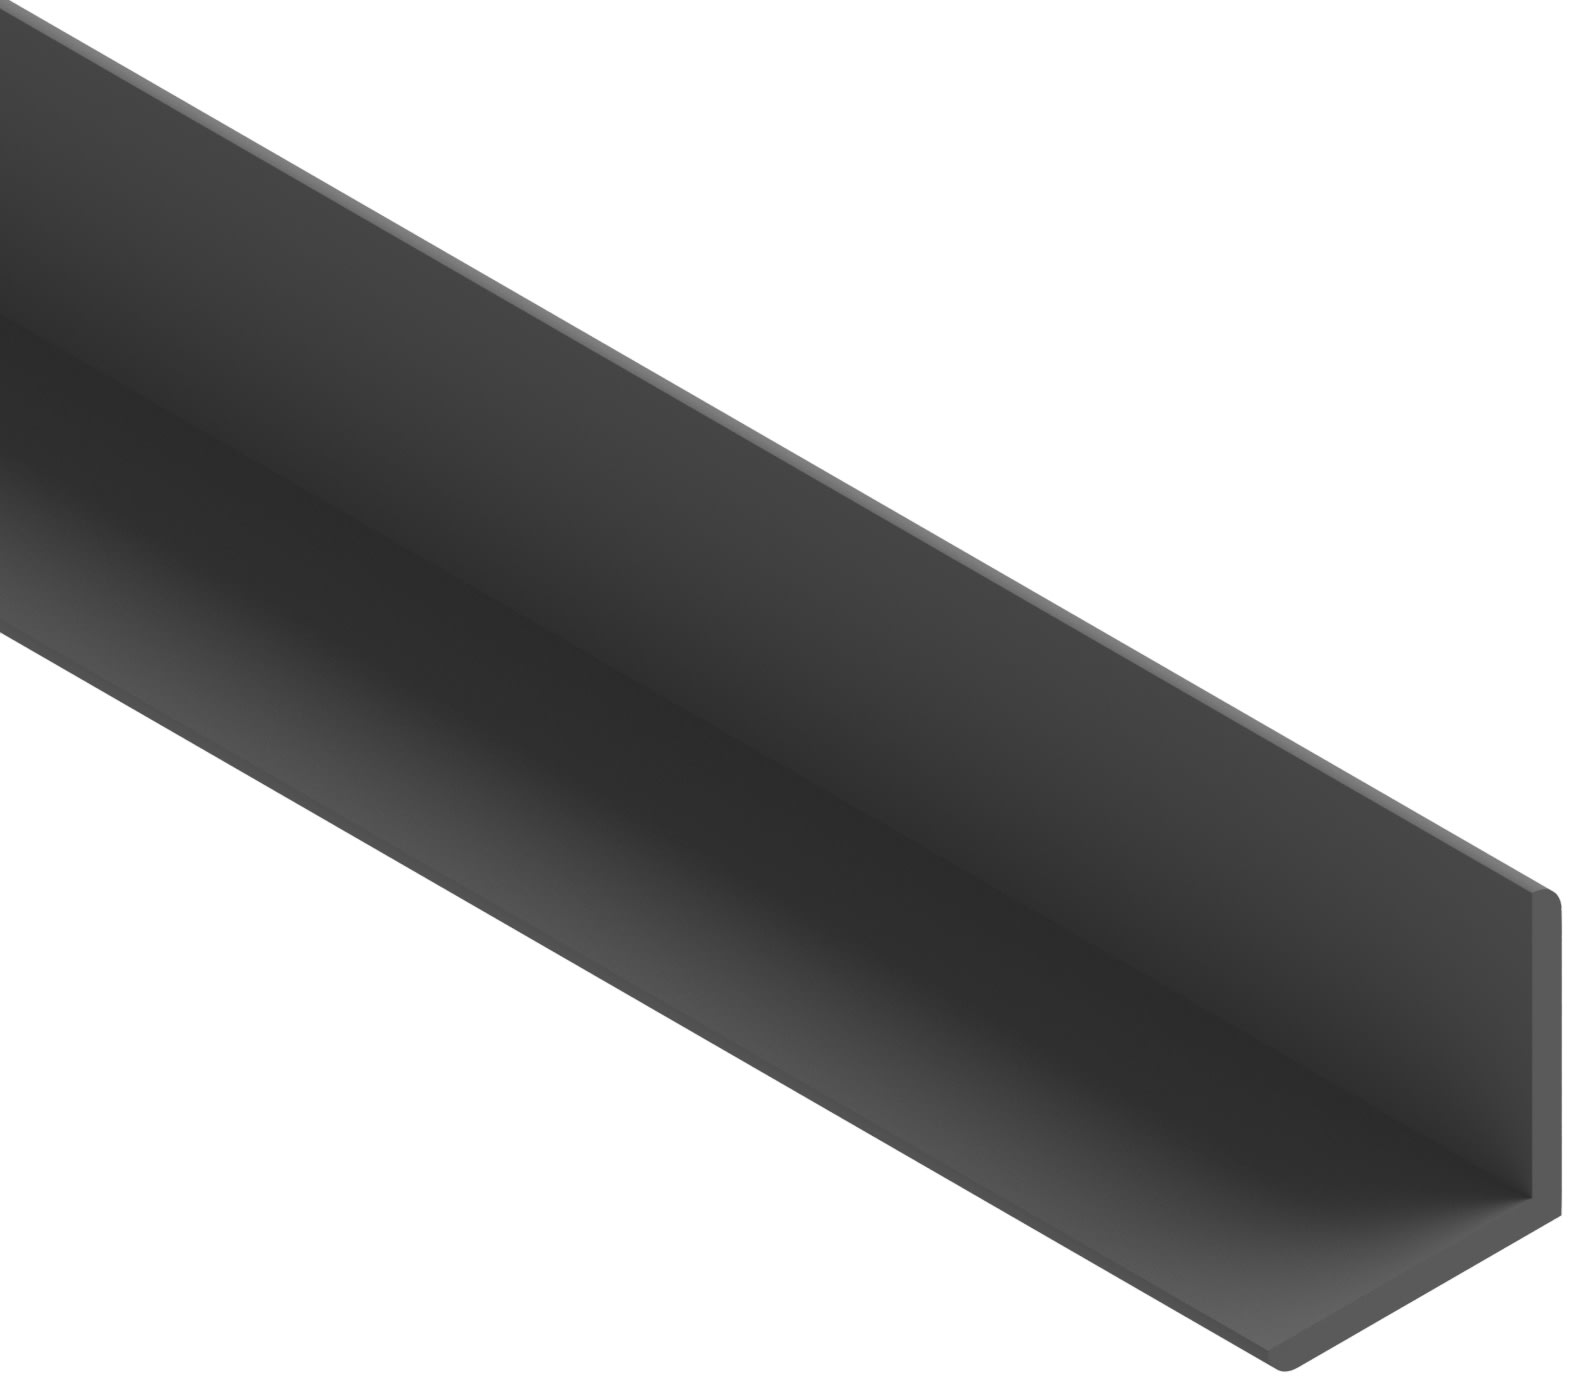 Cheshire Mouldings Black PVC Angle - 12 x